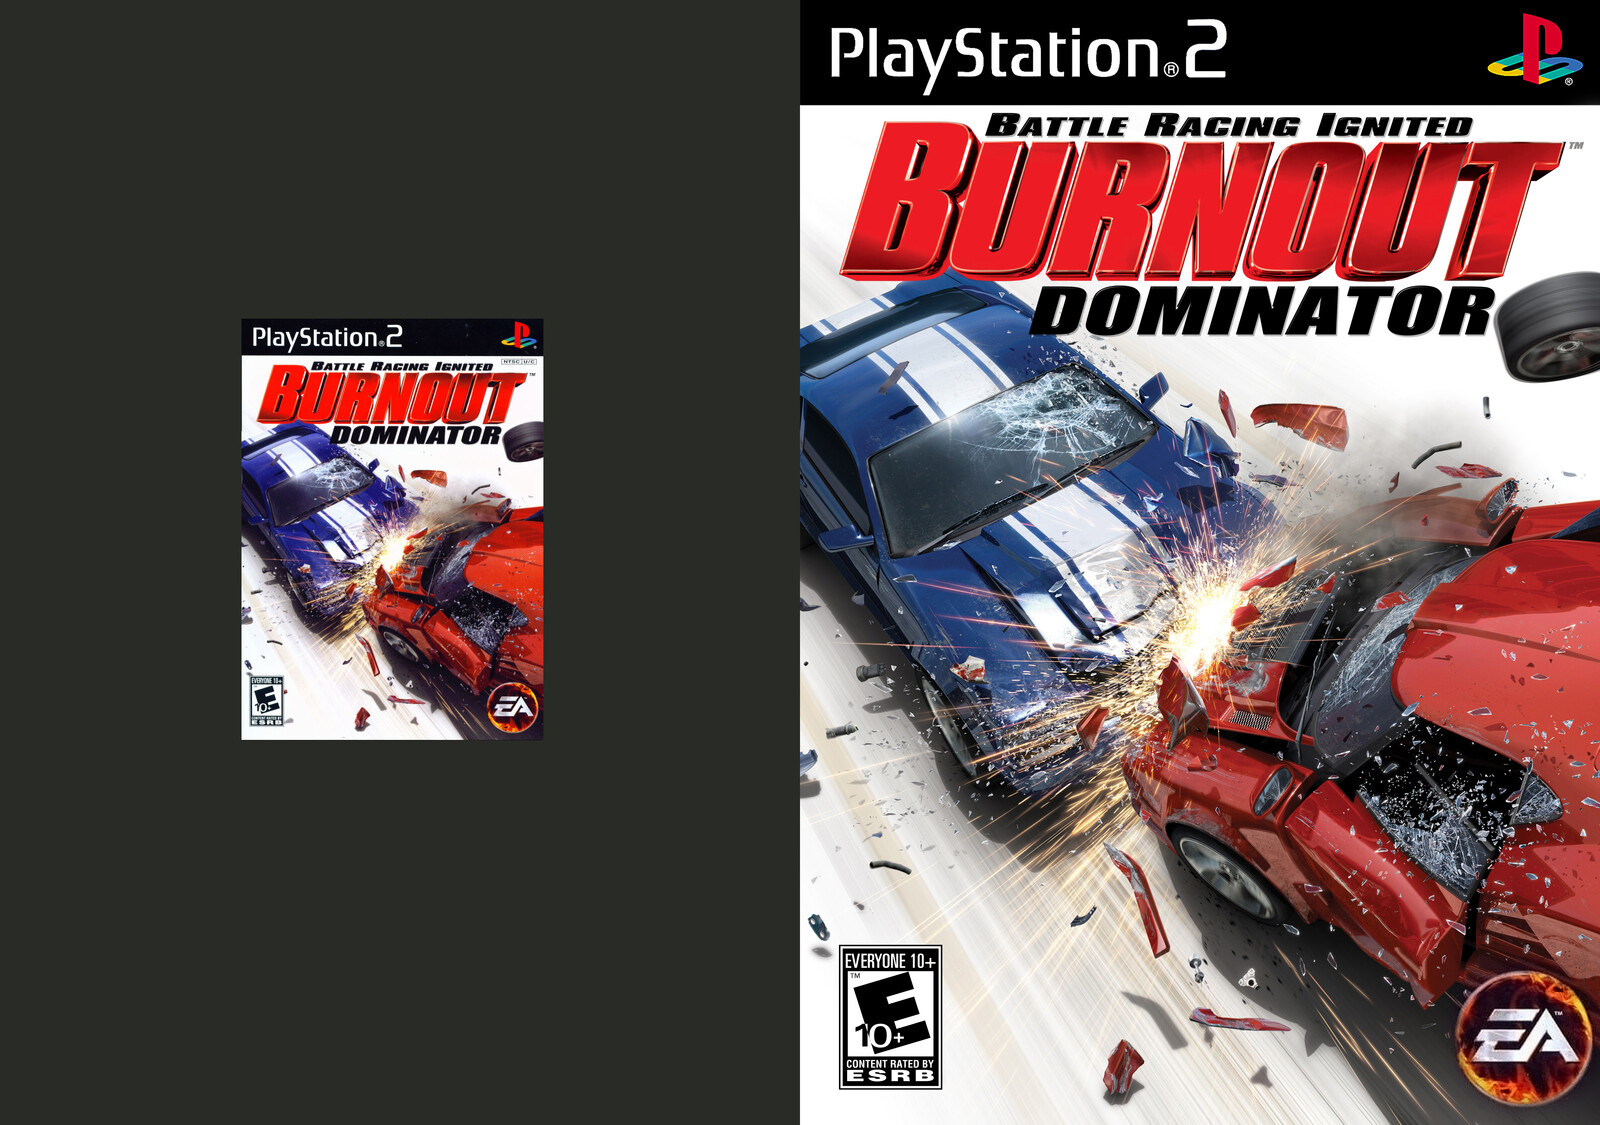 Burnout: Dominator (2007) - Scanned cover vs. Upscaled